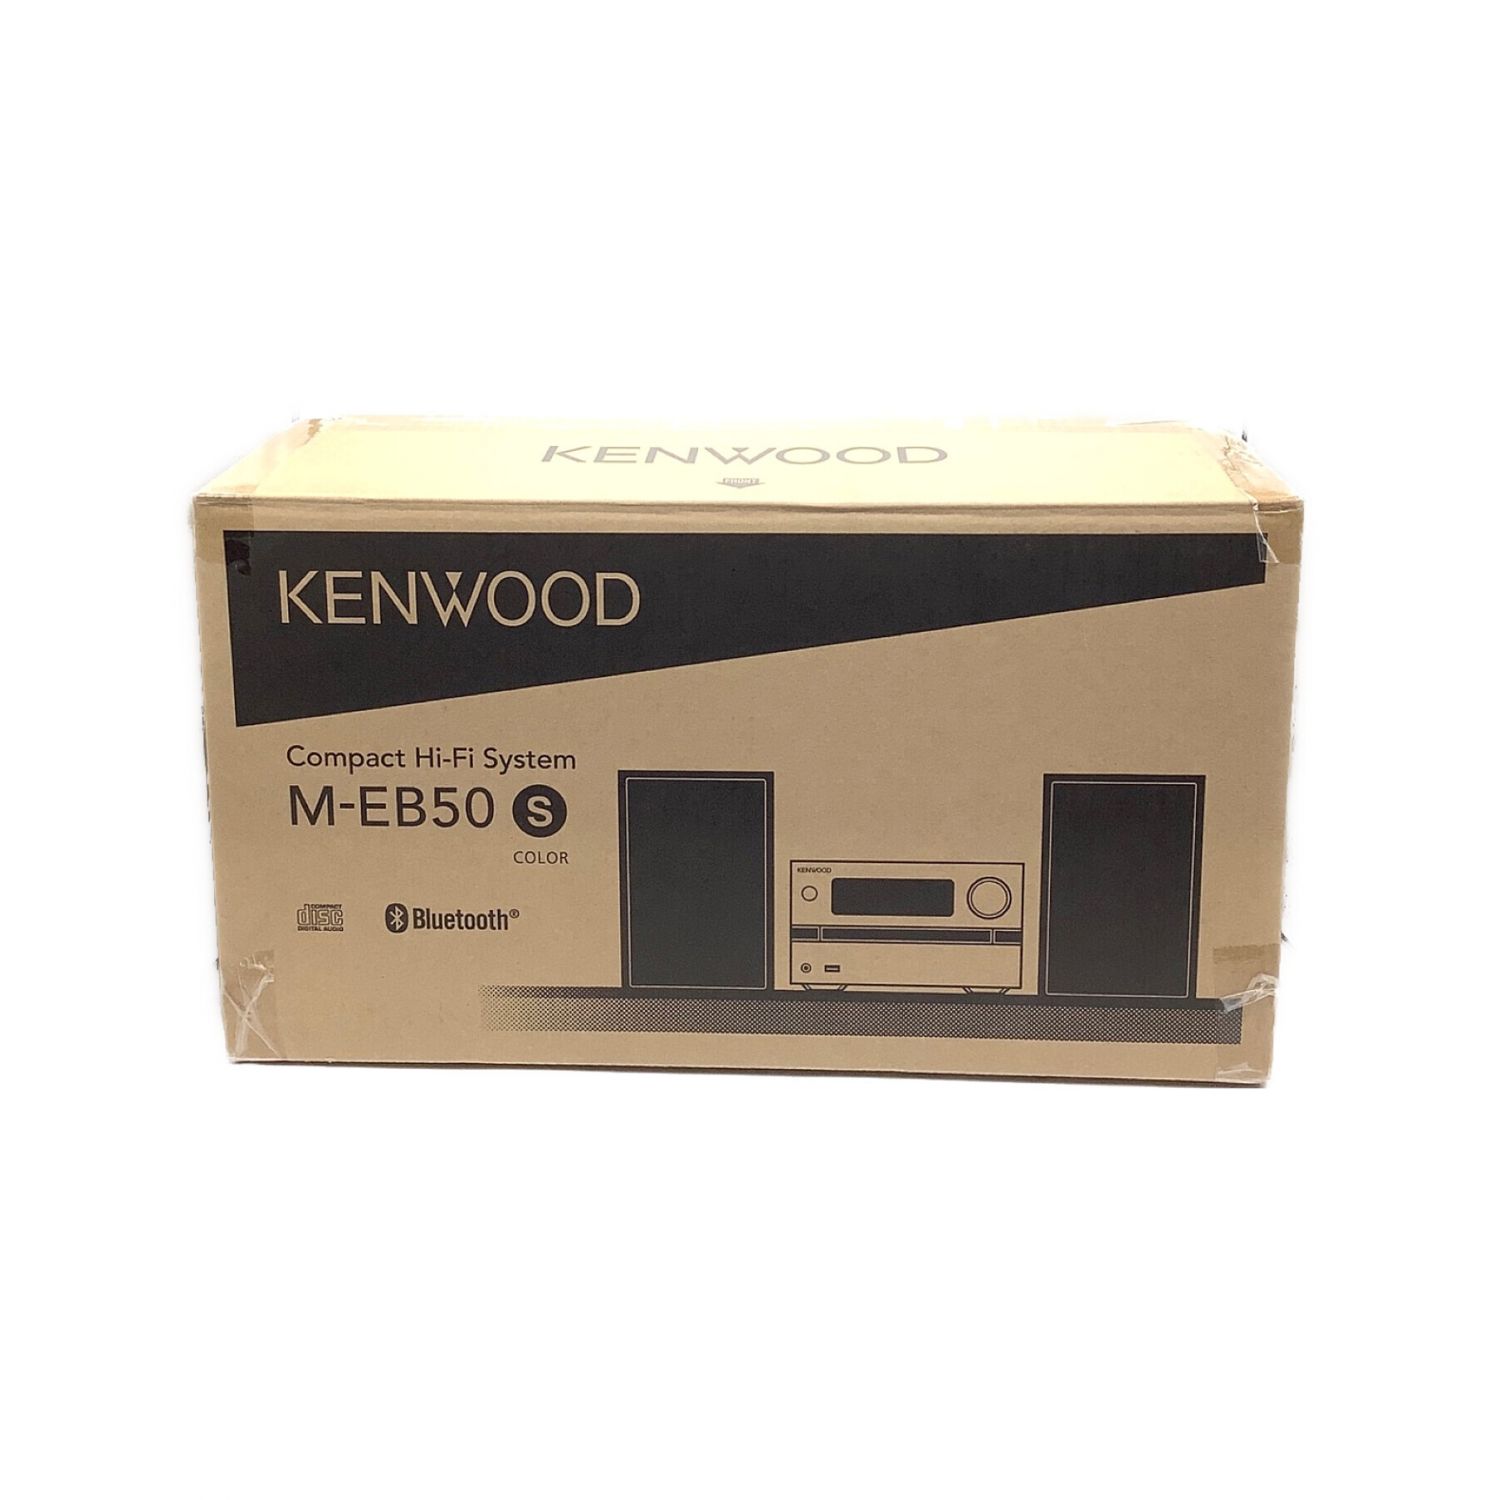 KENWOOD M-EB50-S コンパクトHi-Fiシステム - スピーカー